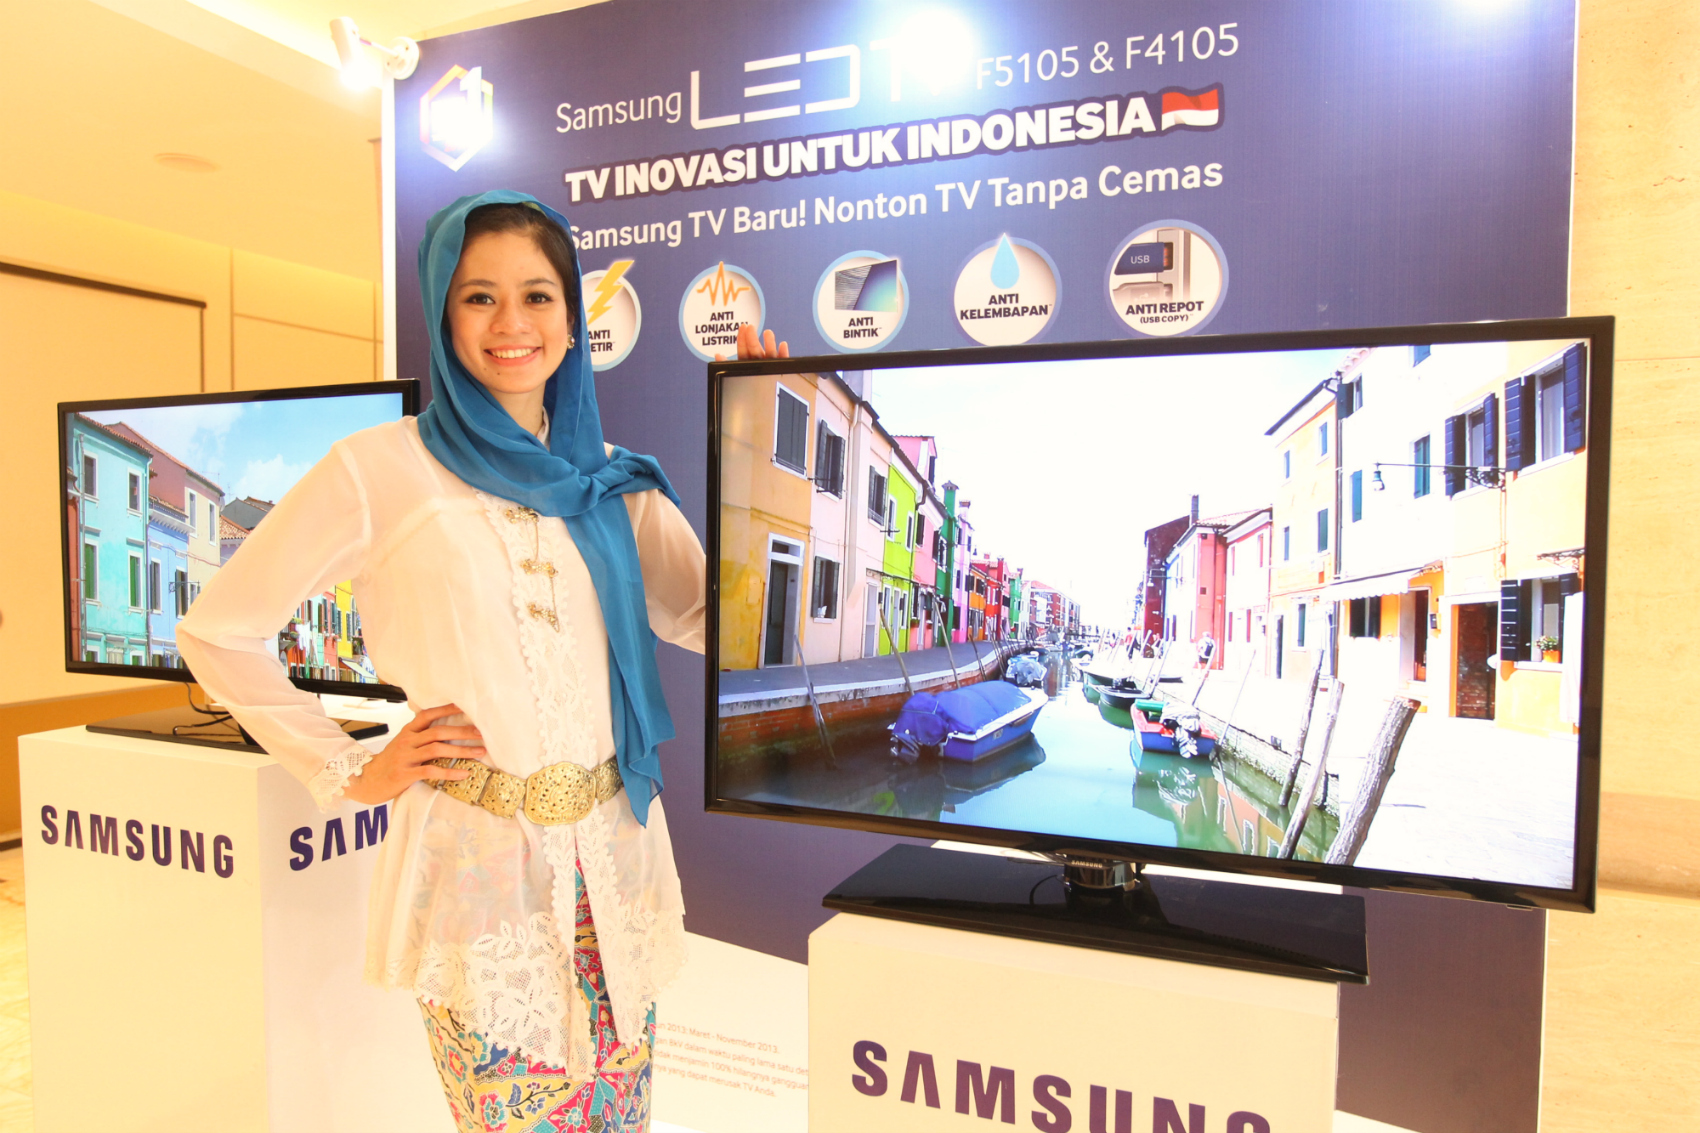 Televisi Inovasi Untuk Indonesia